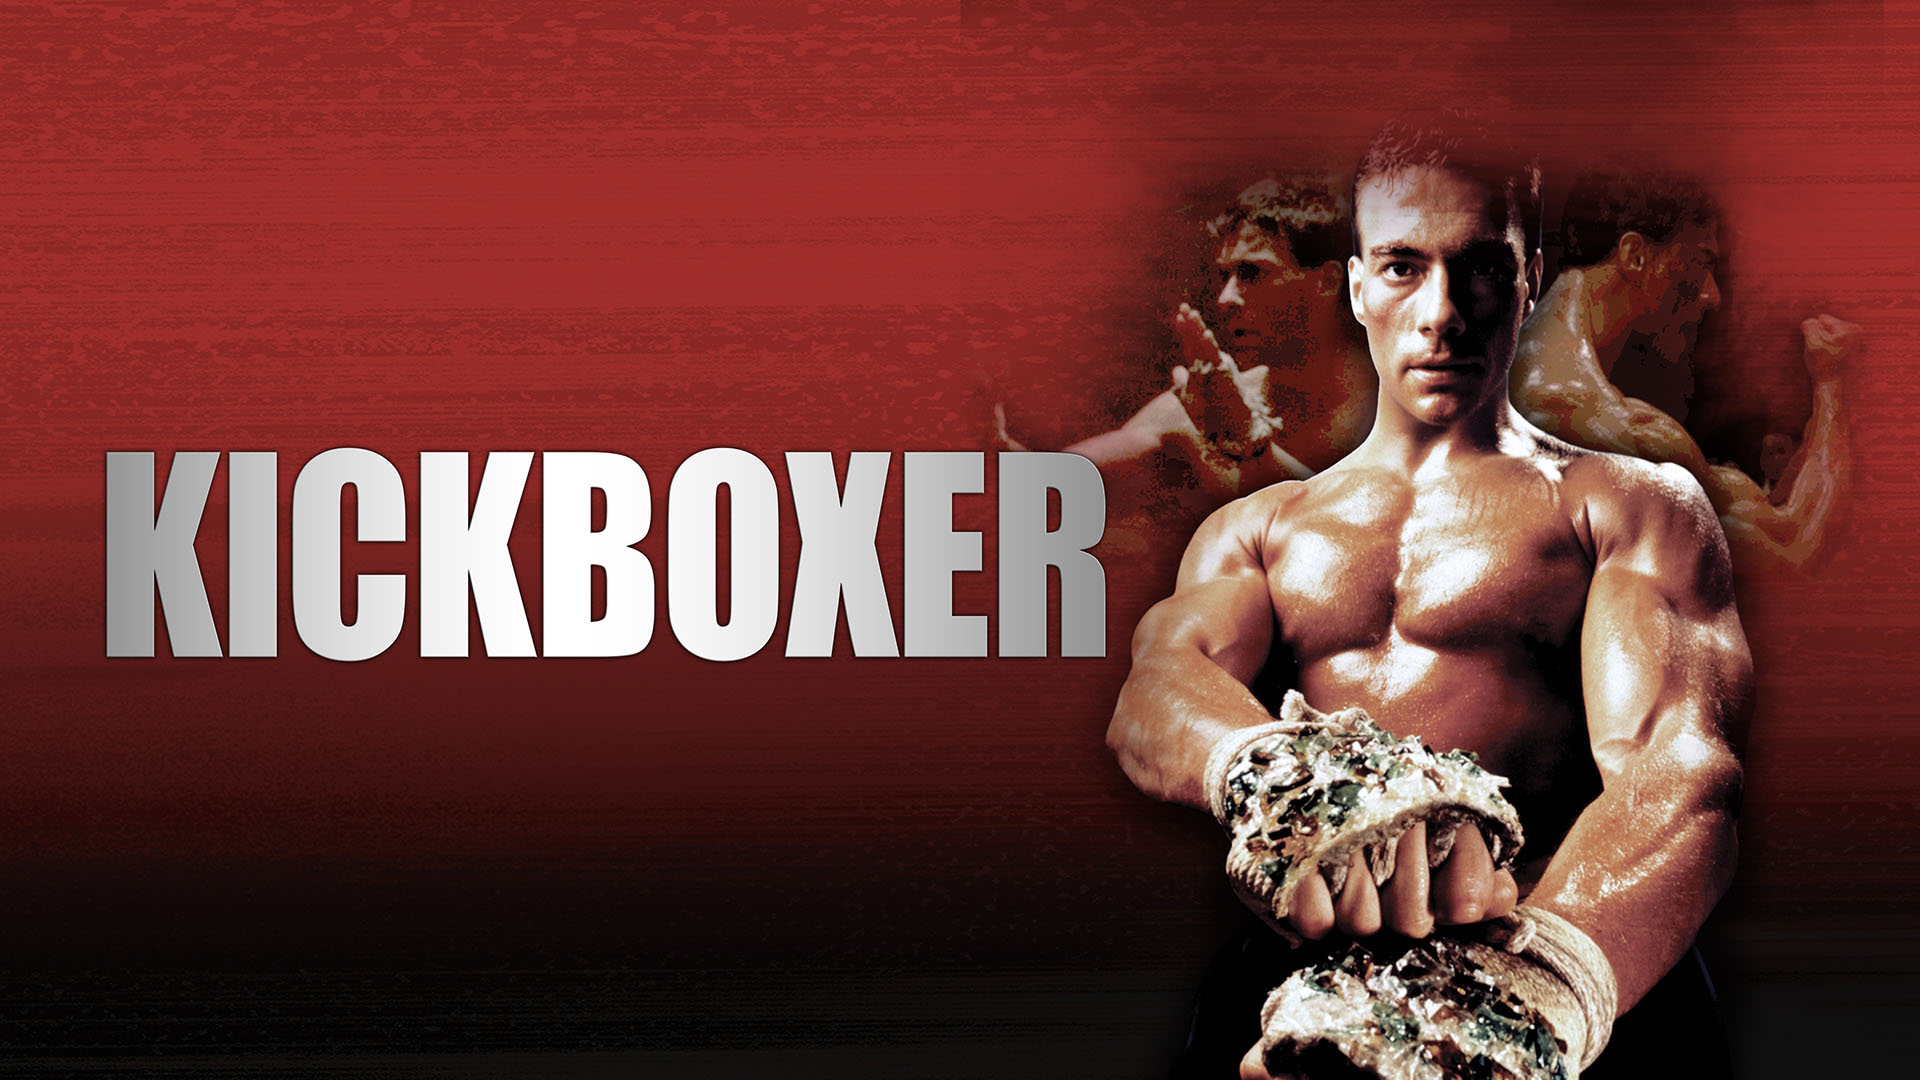 Watch Kickboxer Online | Stream Full Movies